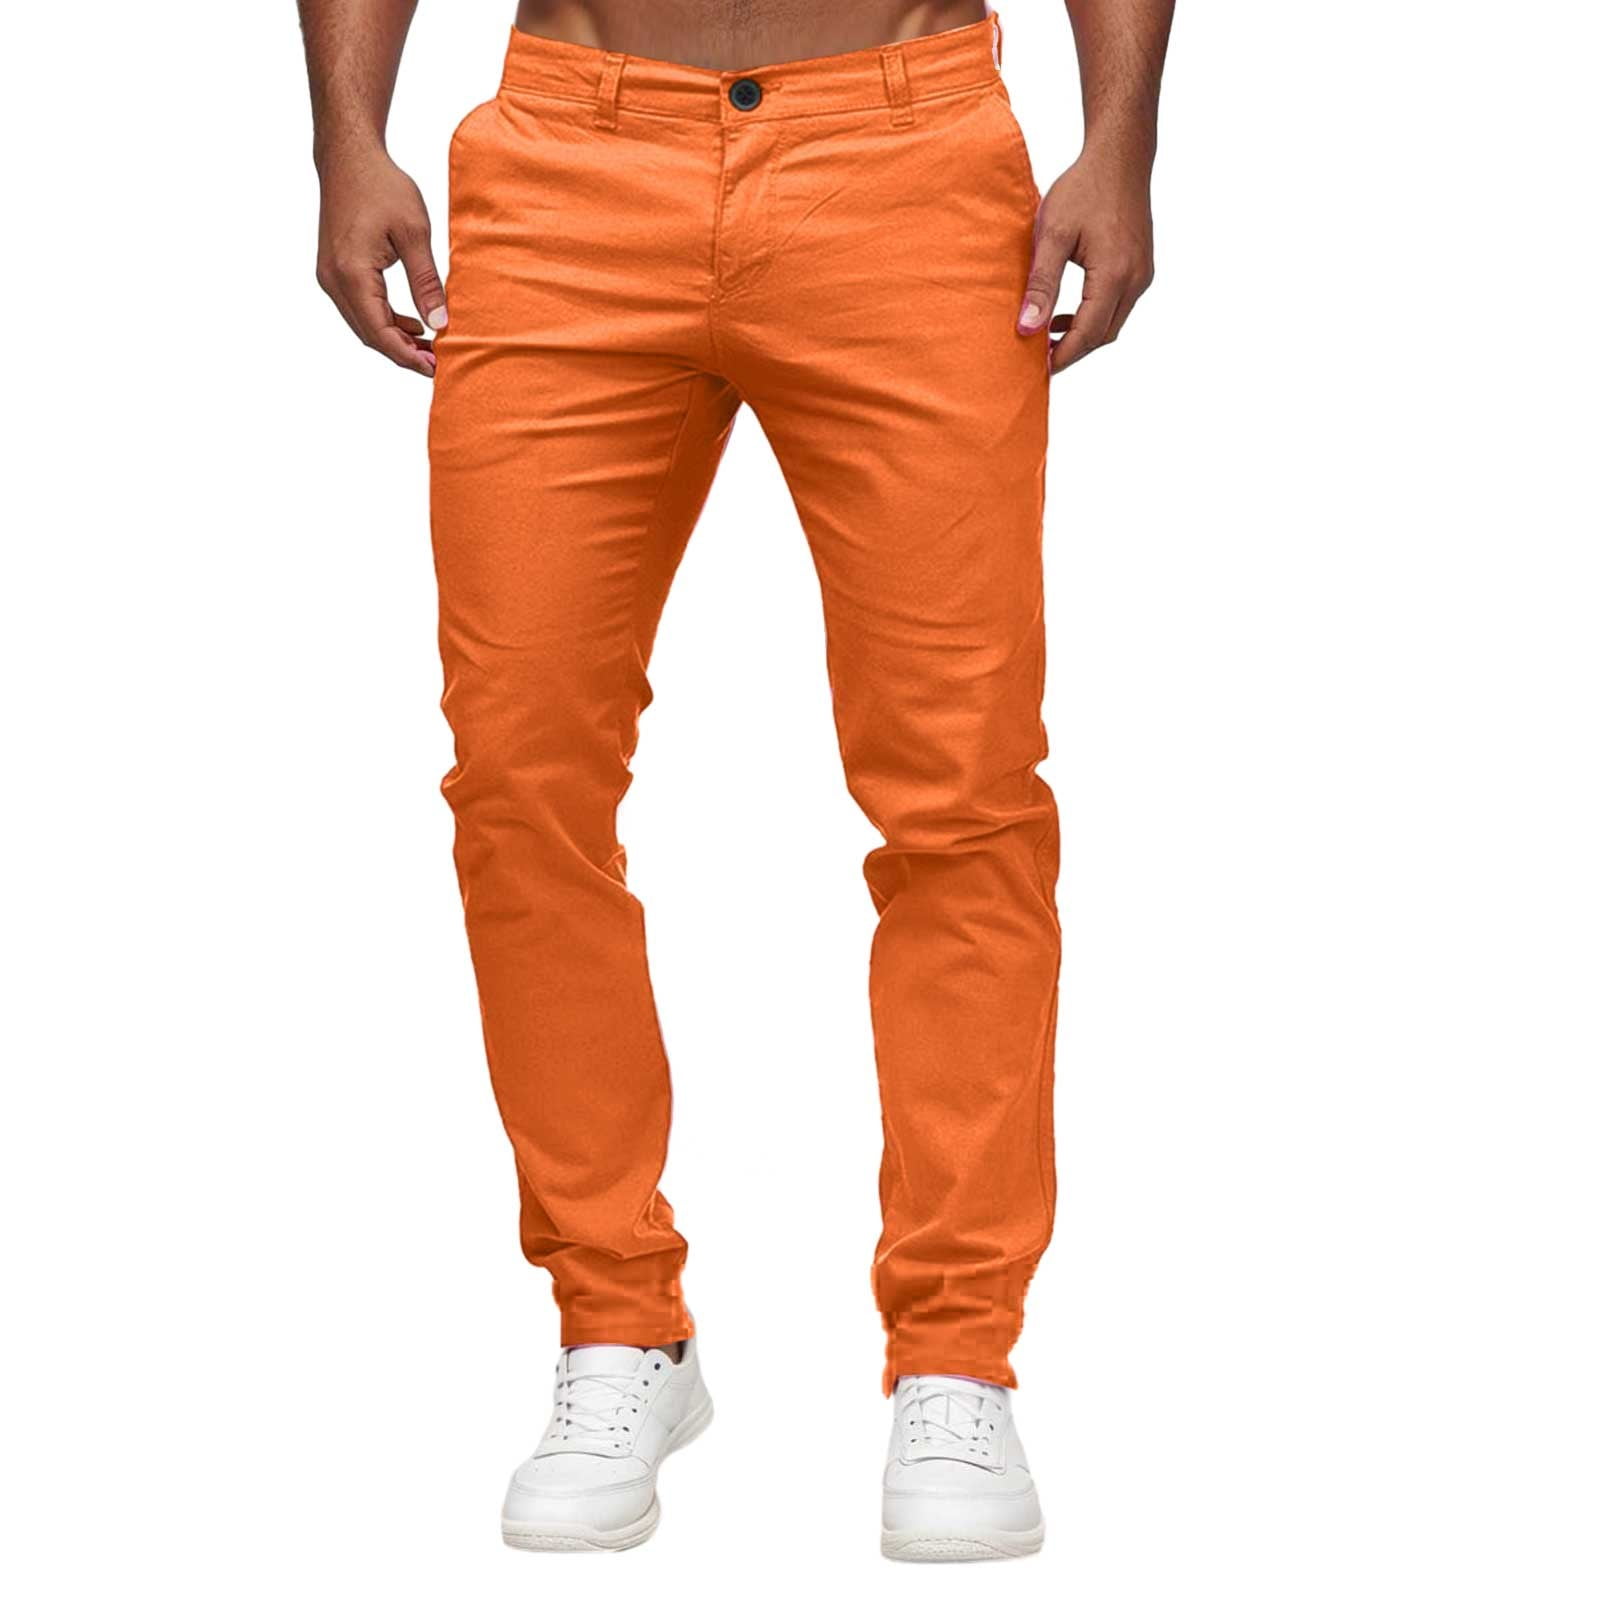 Men's Orange Pants Outfits-35 Best Ways to Wear Orange Pants | Orange pants  outfit, Pants outfit men, White shirt men